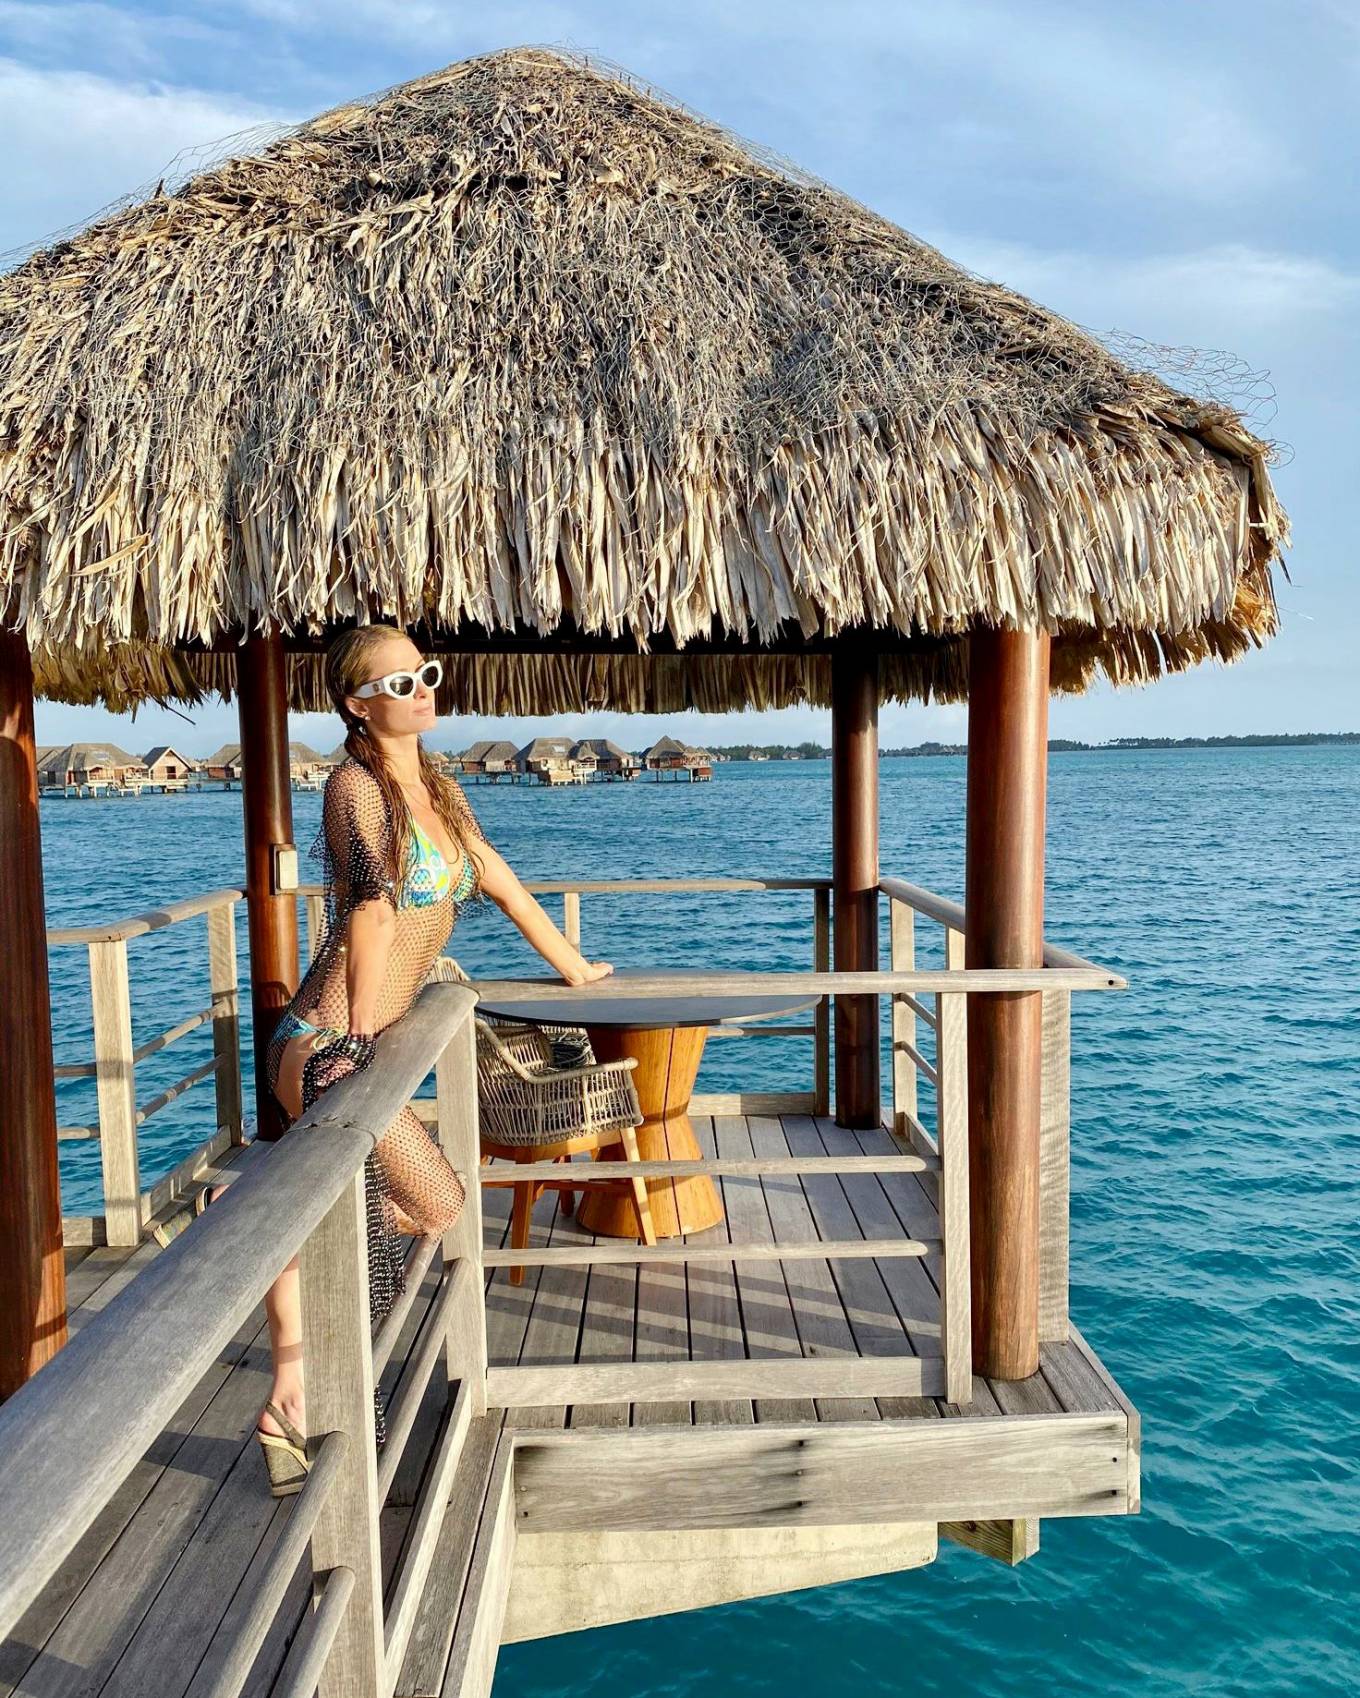 Paris Hilton On holiday in Bora Bora